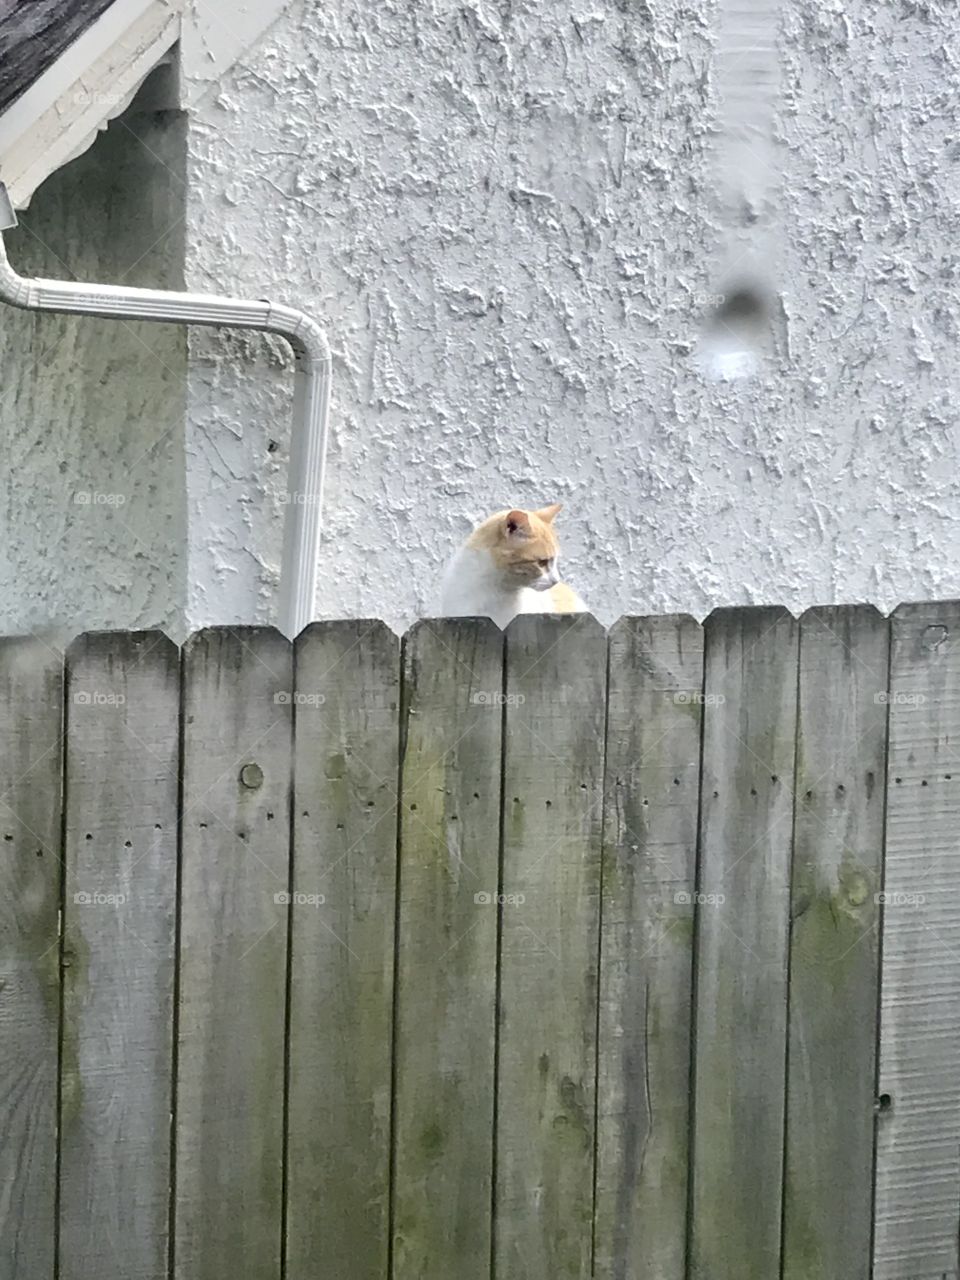 Stray white and orange cat peeking over the wooden fence 